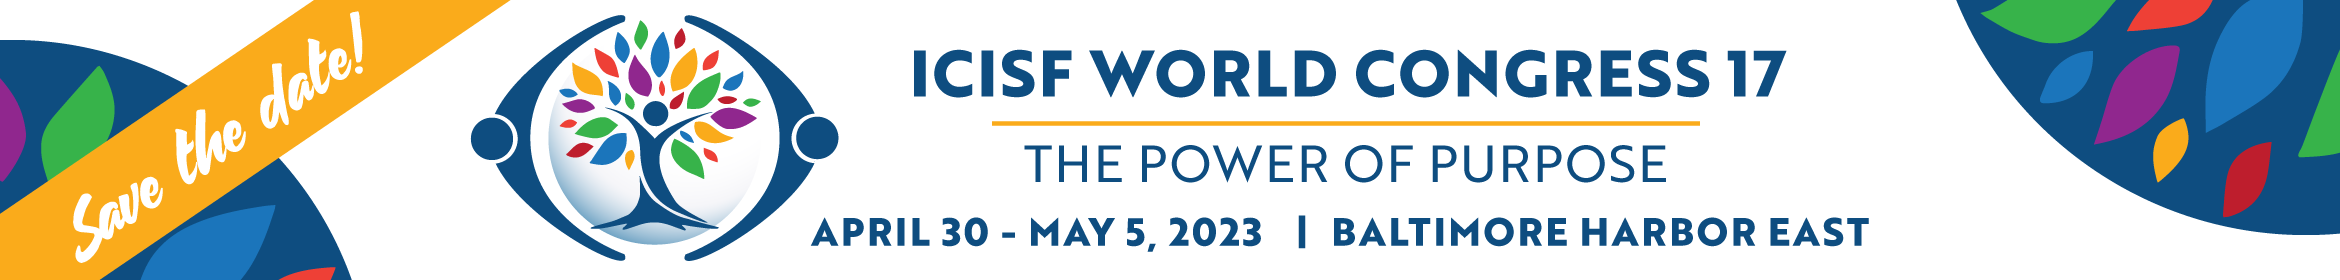 ICISF World Congress 17 Main banner